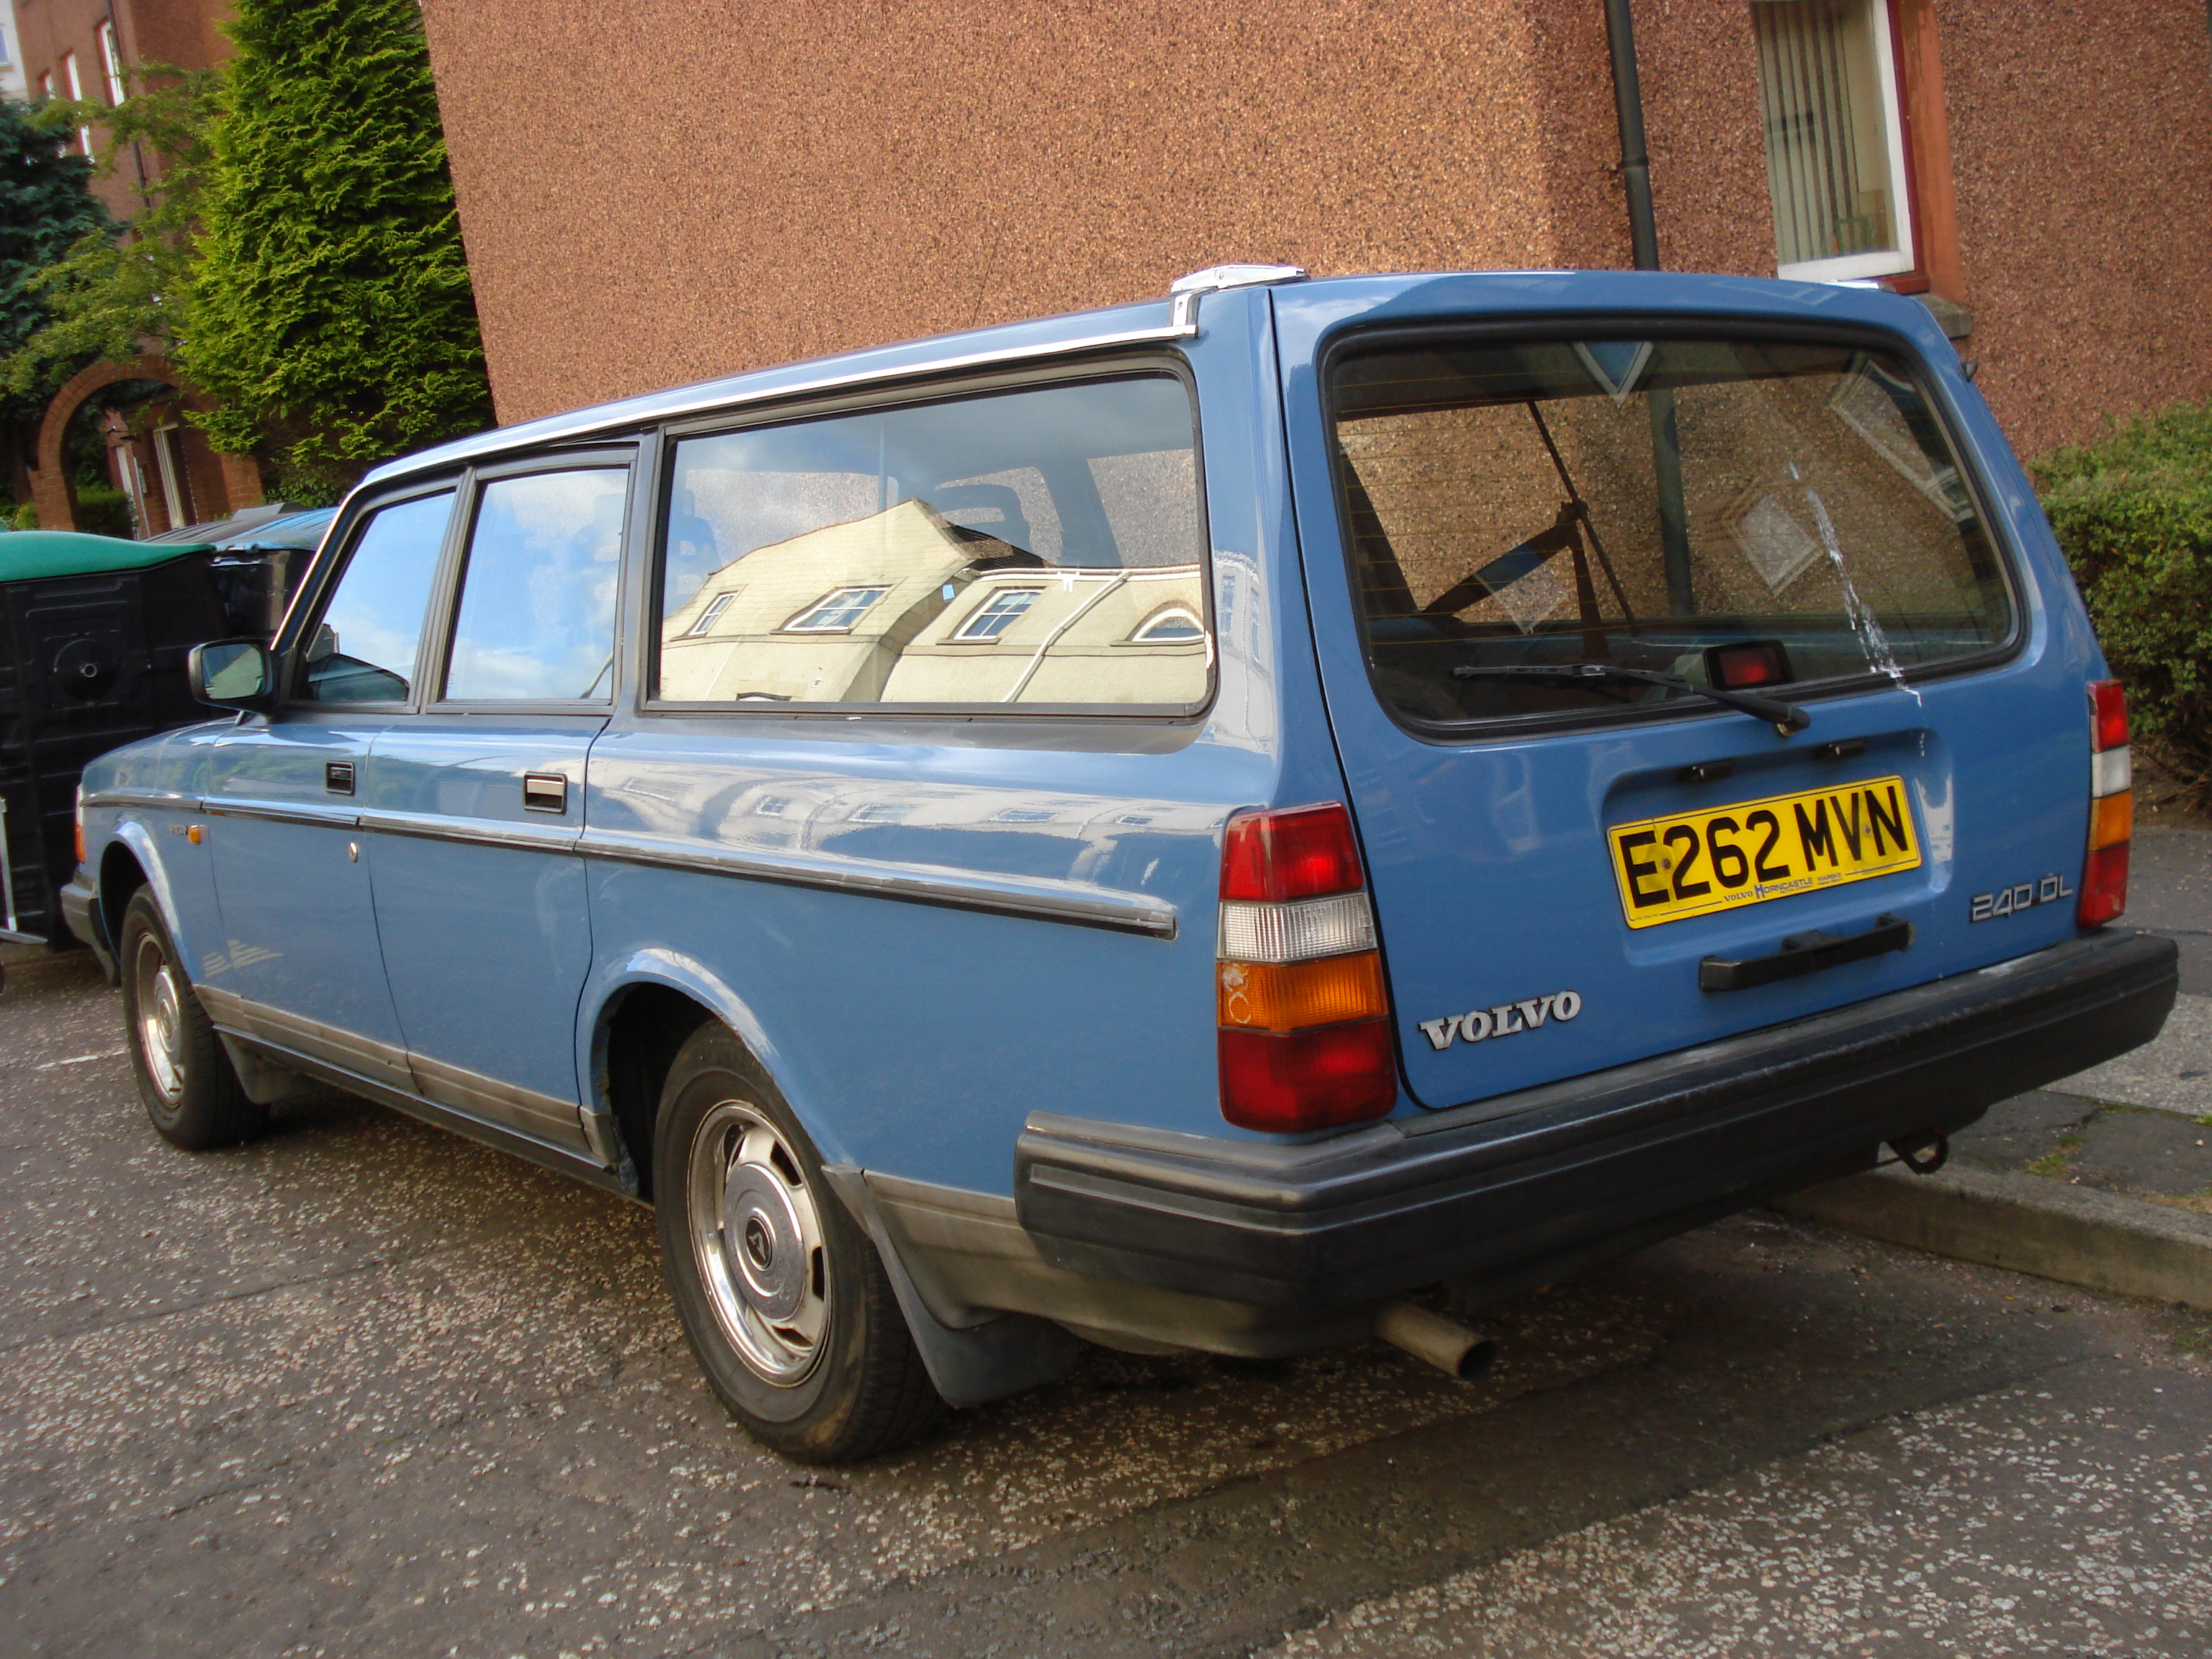 1988 Volvo 240 DL Estate | Flickr - Photo Sharing!